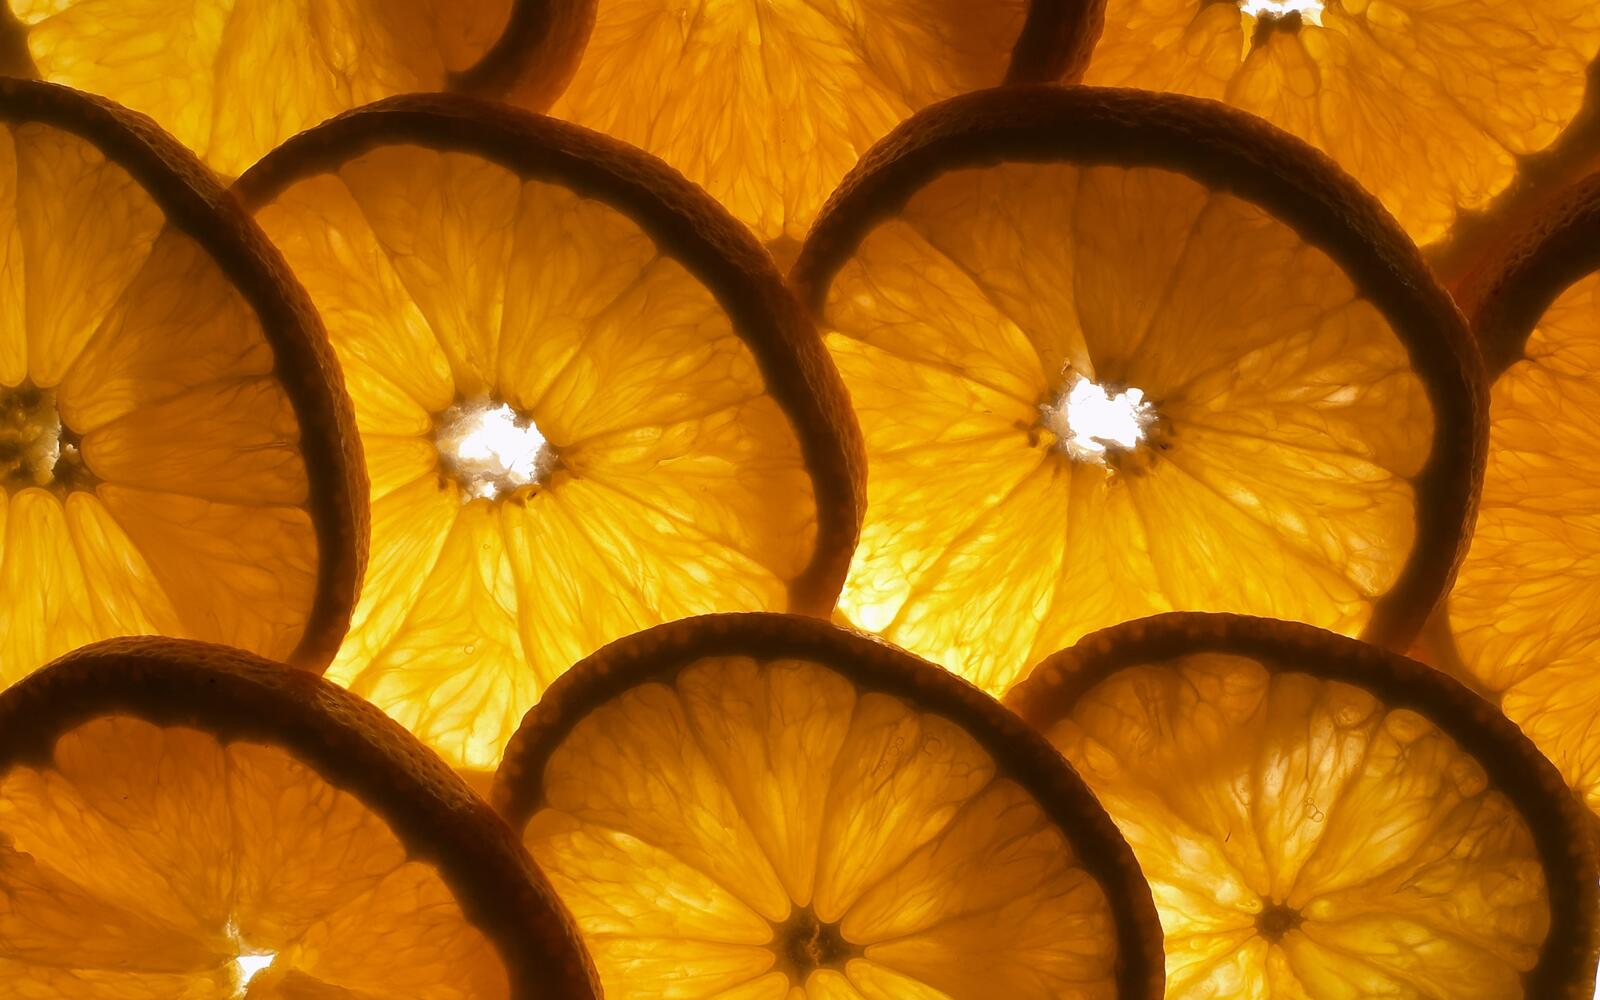 Wallpapers orange slices lemon on the desktop